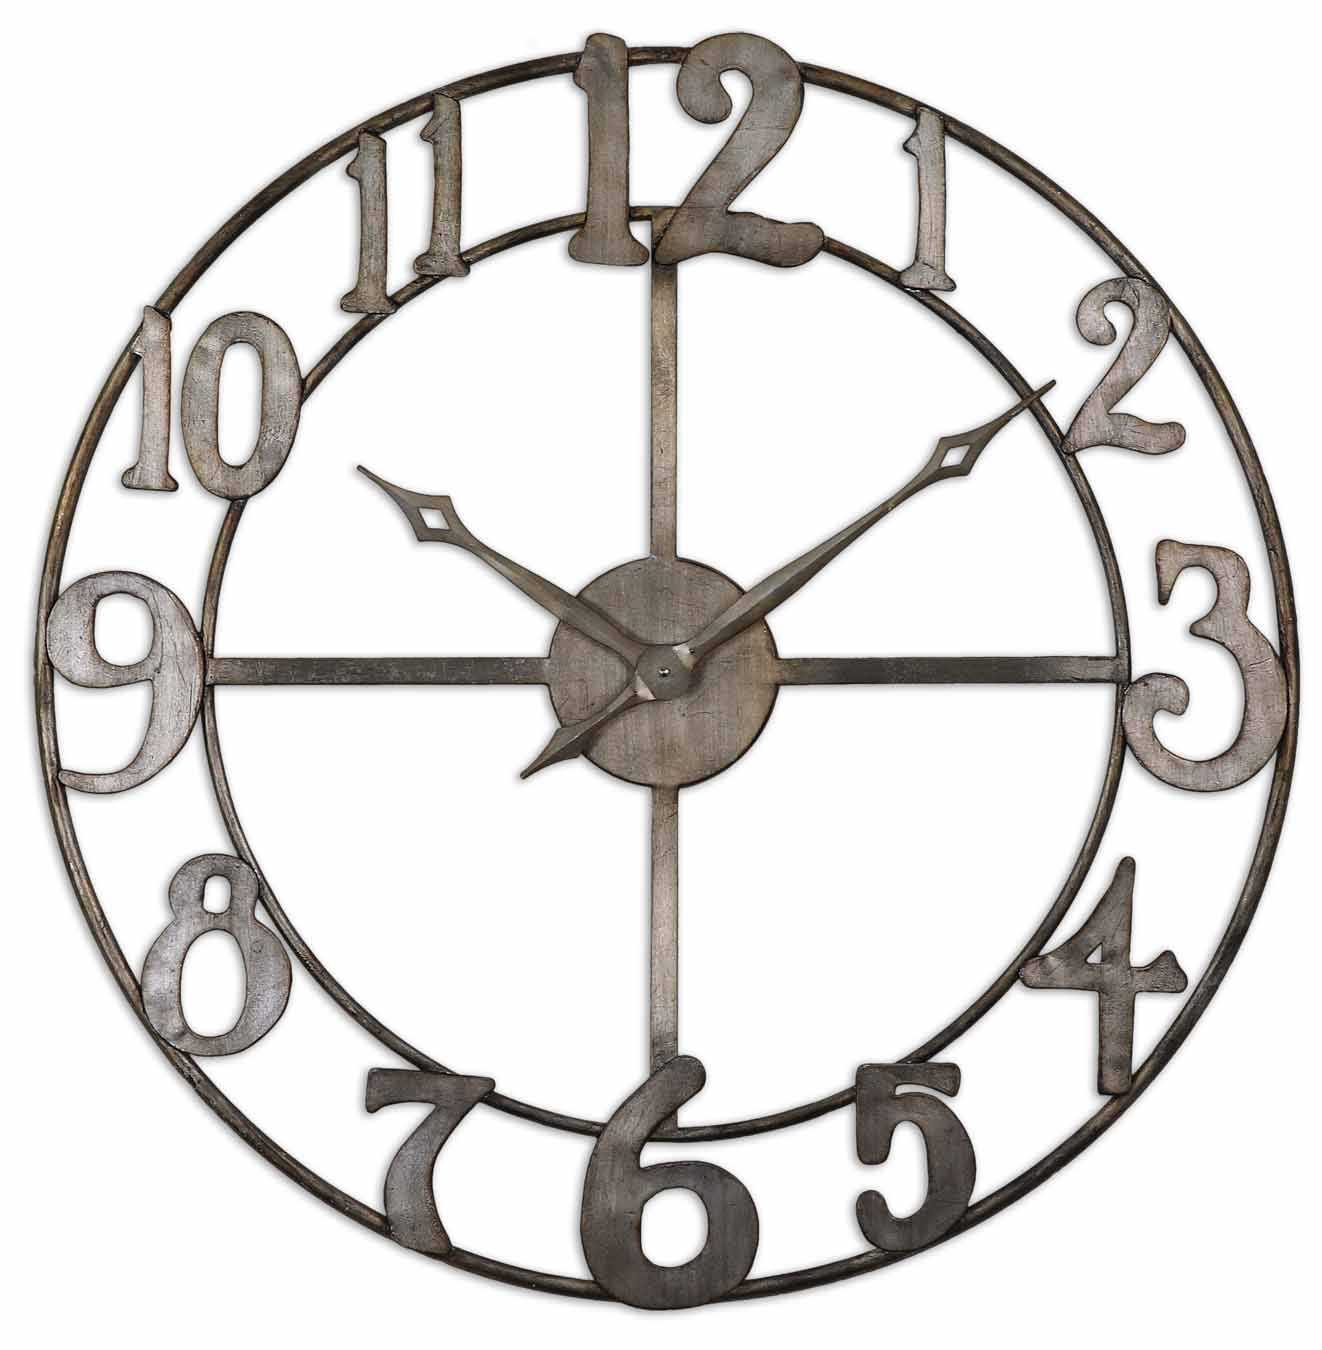 The Delevan Wall Clock